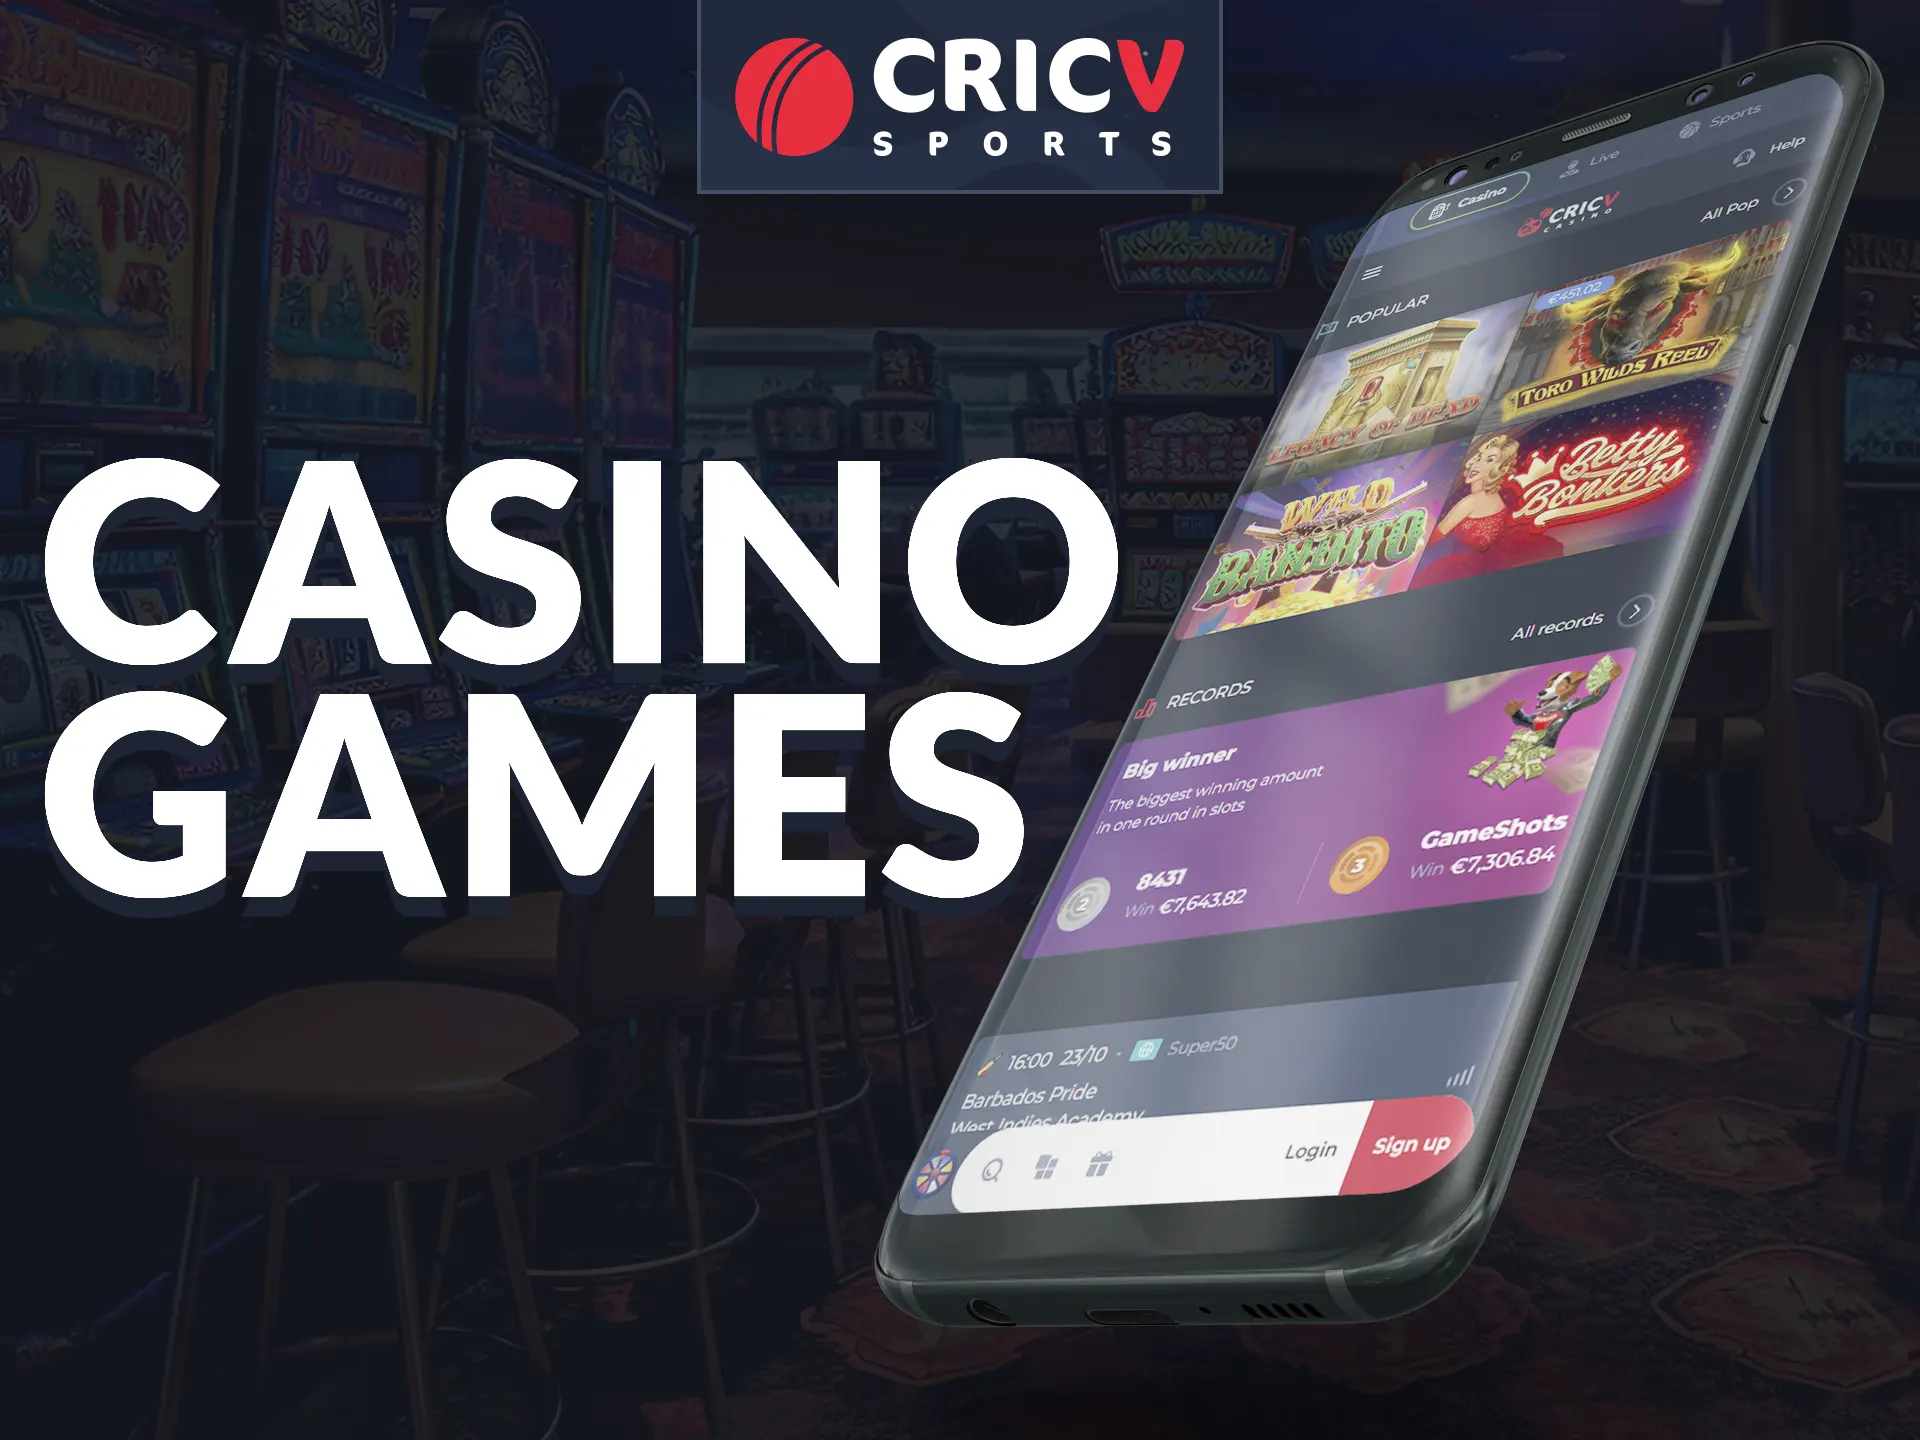 Play in the Cricv casino app.